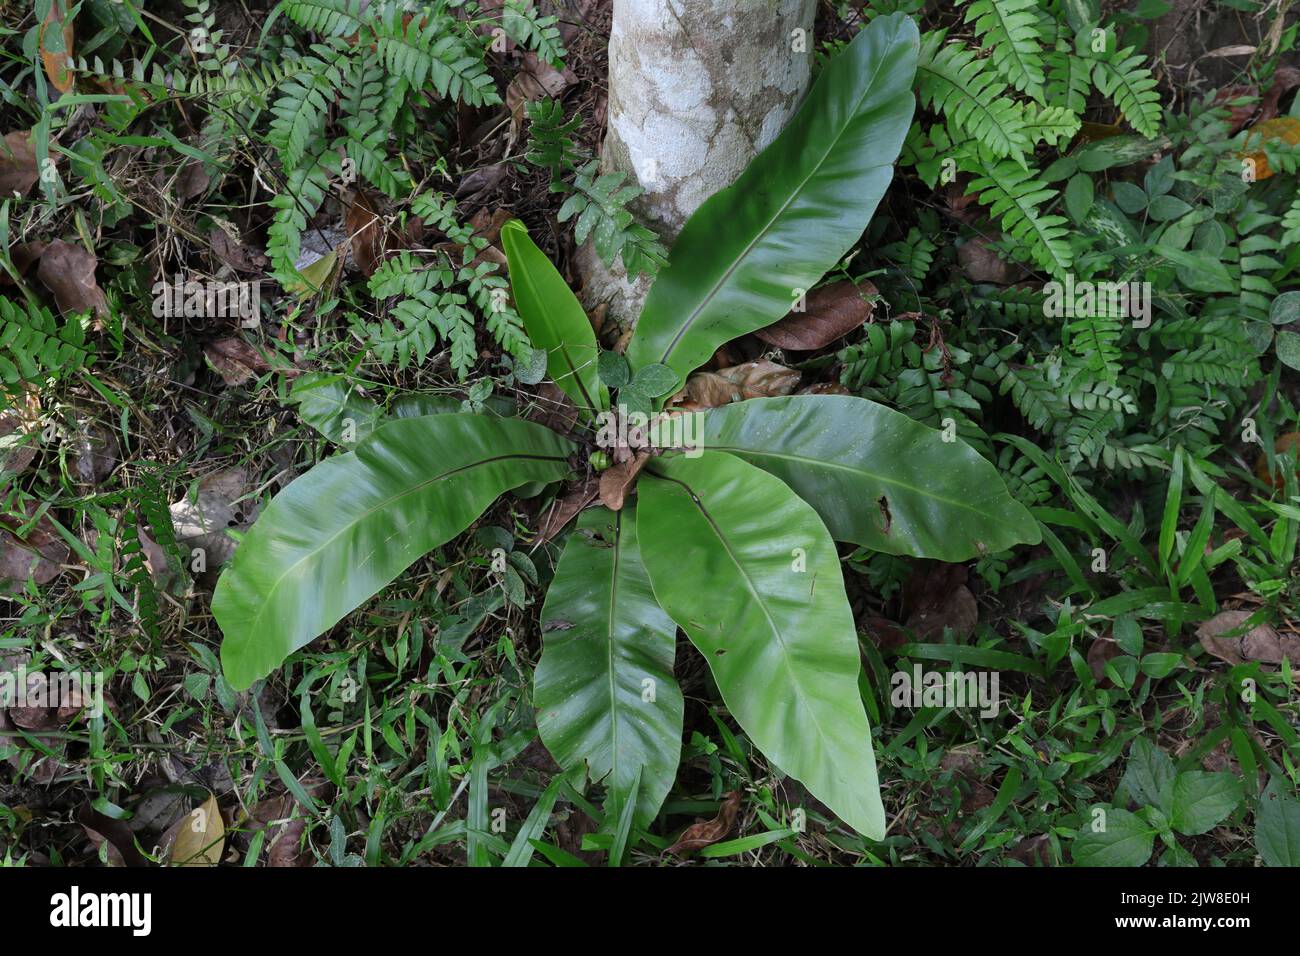 High angle view of an immature Bird's Nest Fern (Asplenium Nidus) plant growing on the ground near a betel nut tree stump root Stock Photo